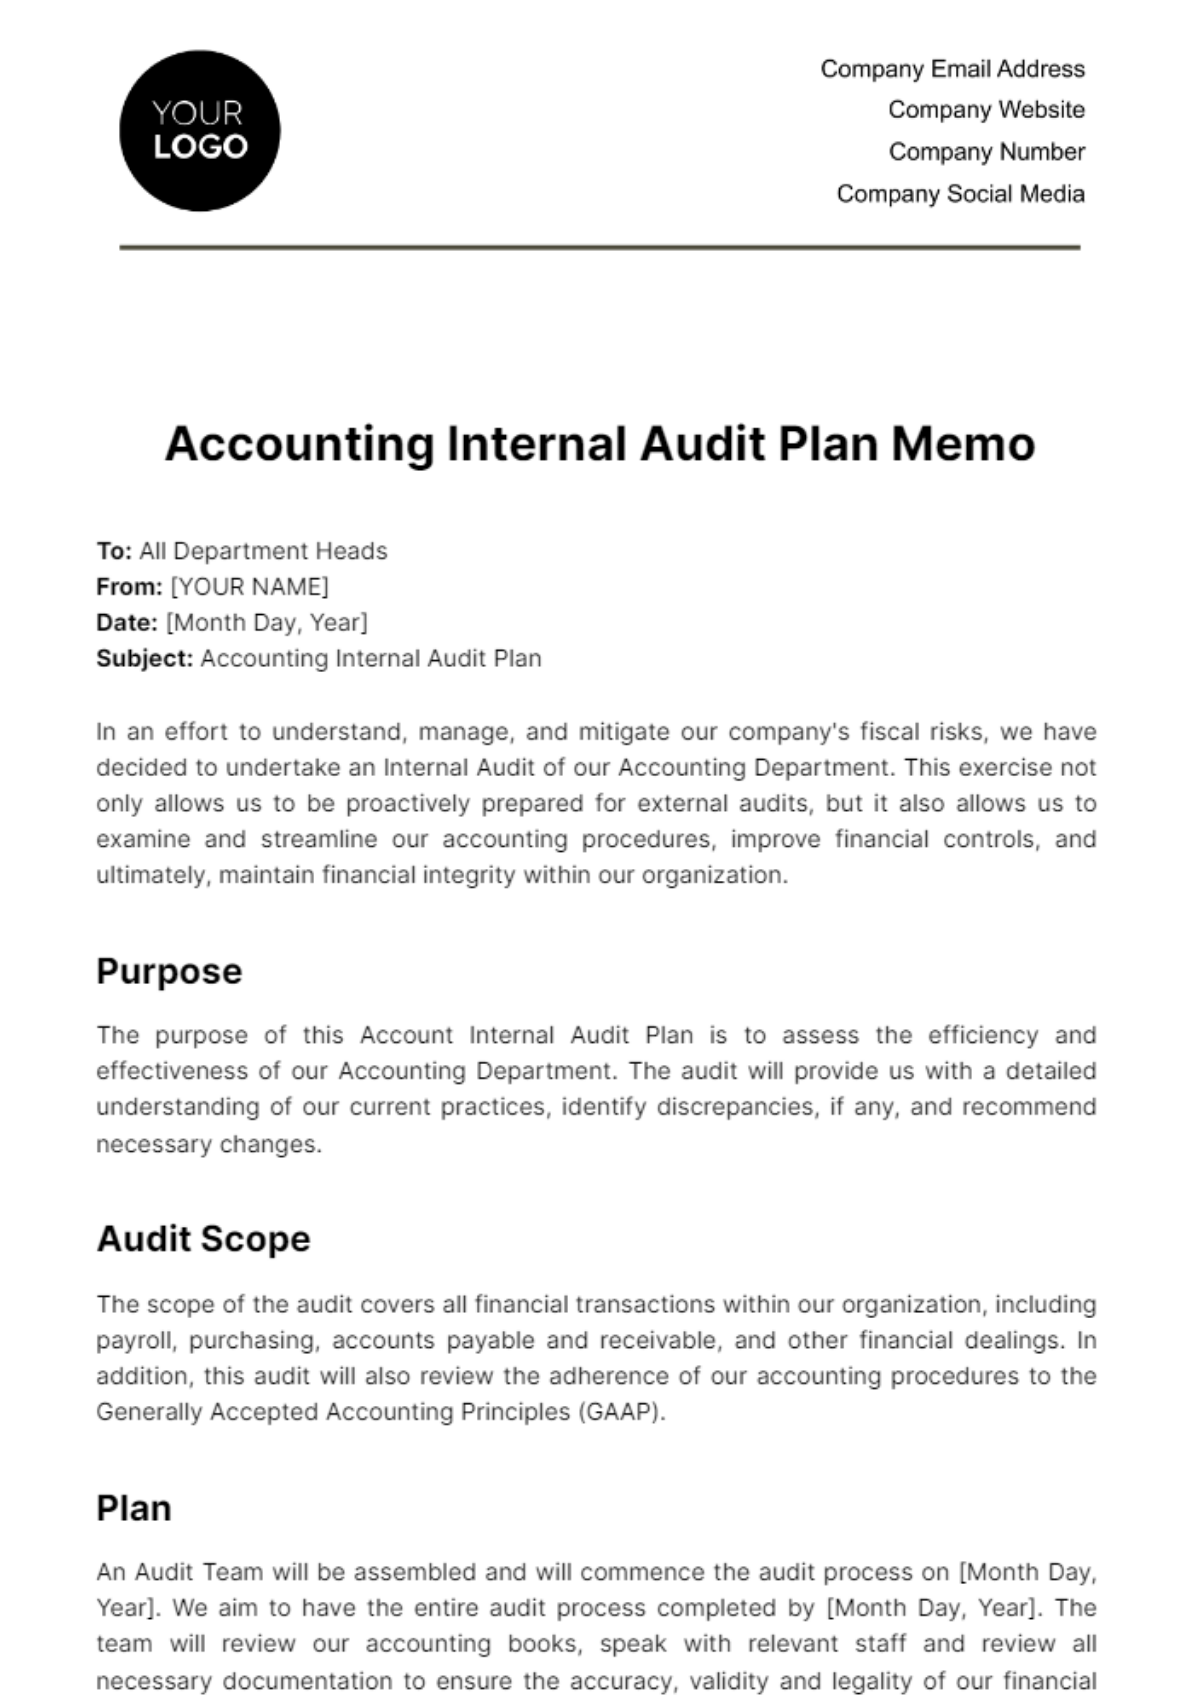 Accounting Internal Audit Plan Memo Template